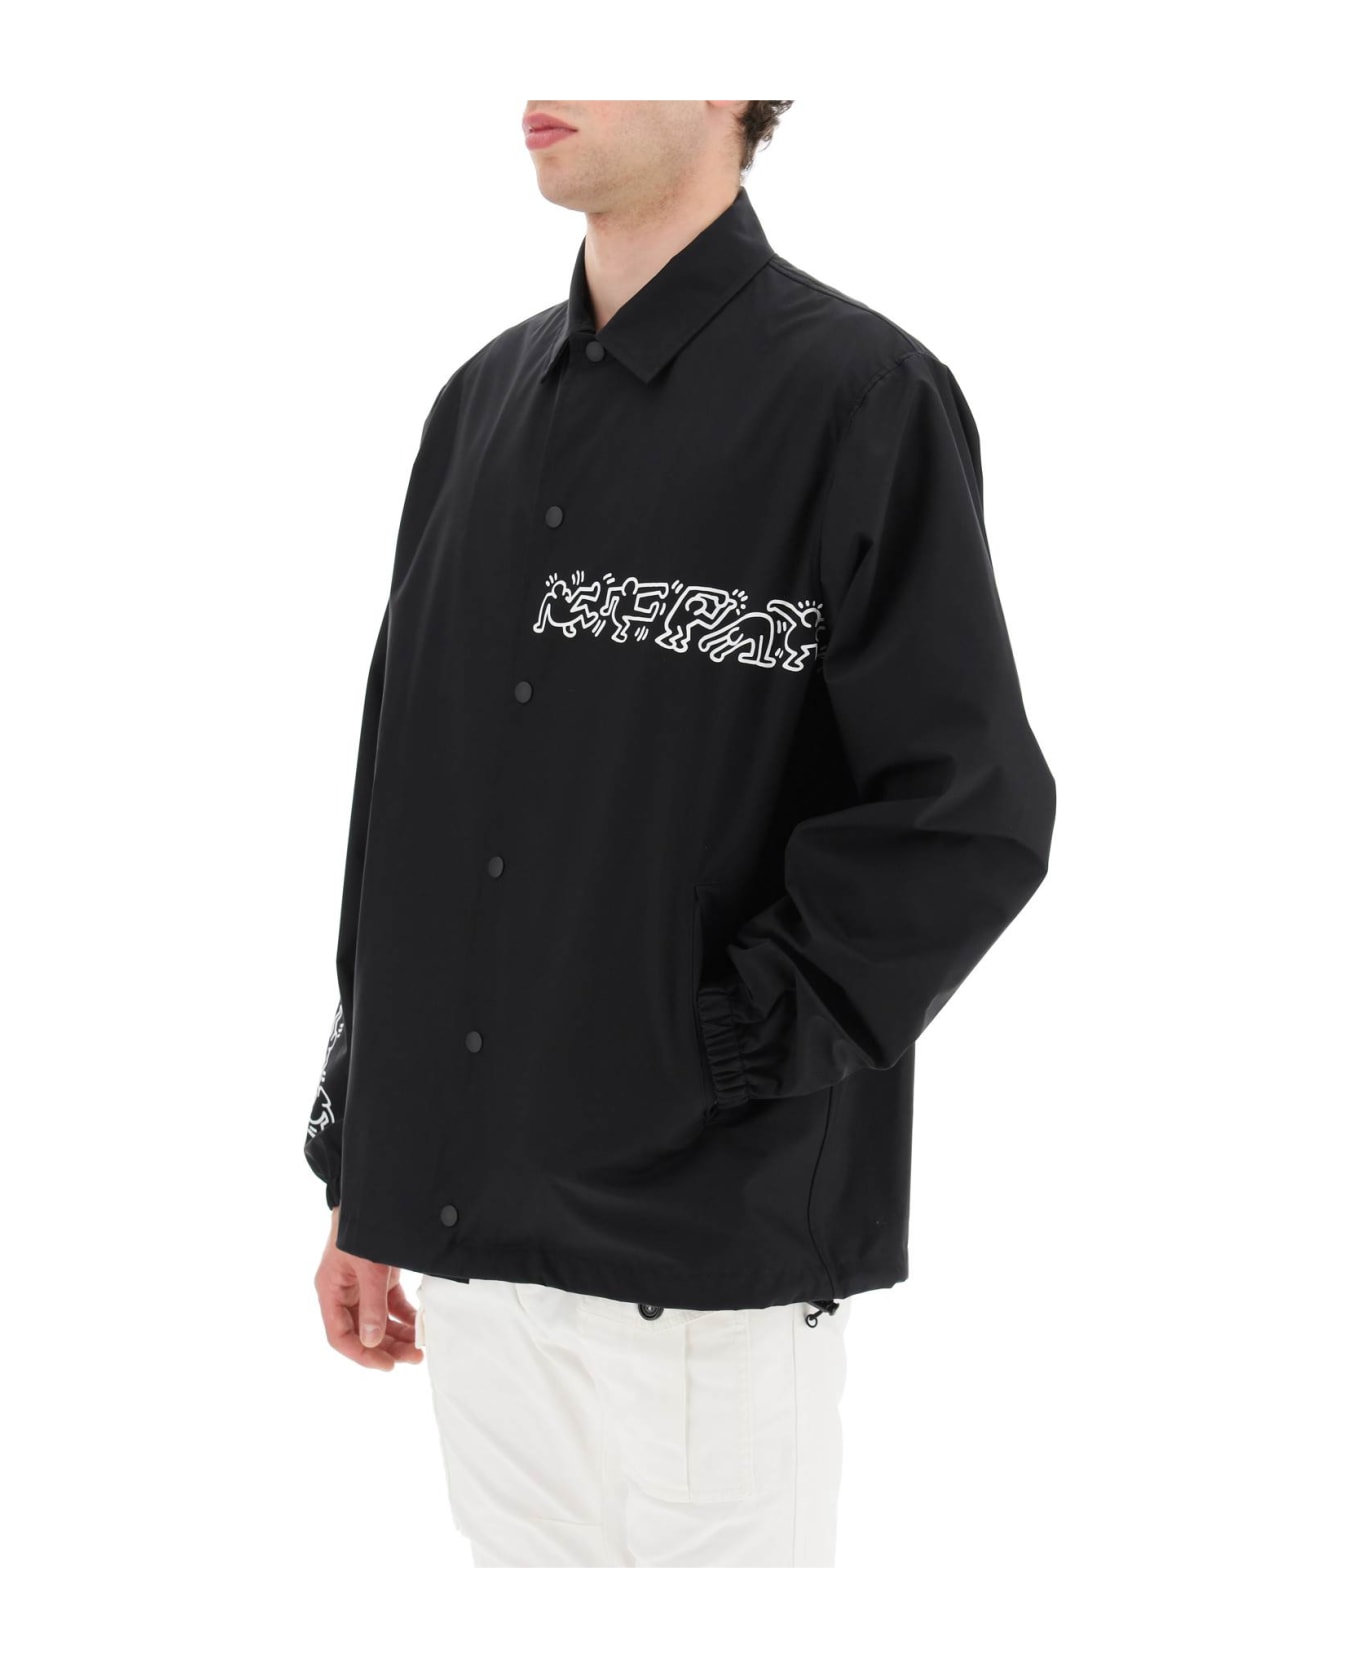 Junya Watanabe Keith Haring Overshirt Jacket - BLACK X WHITE (Black)